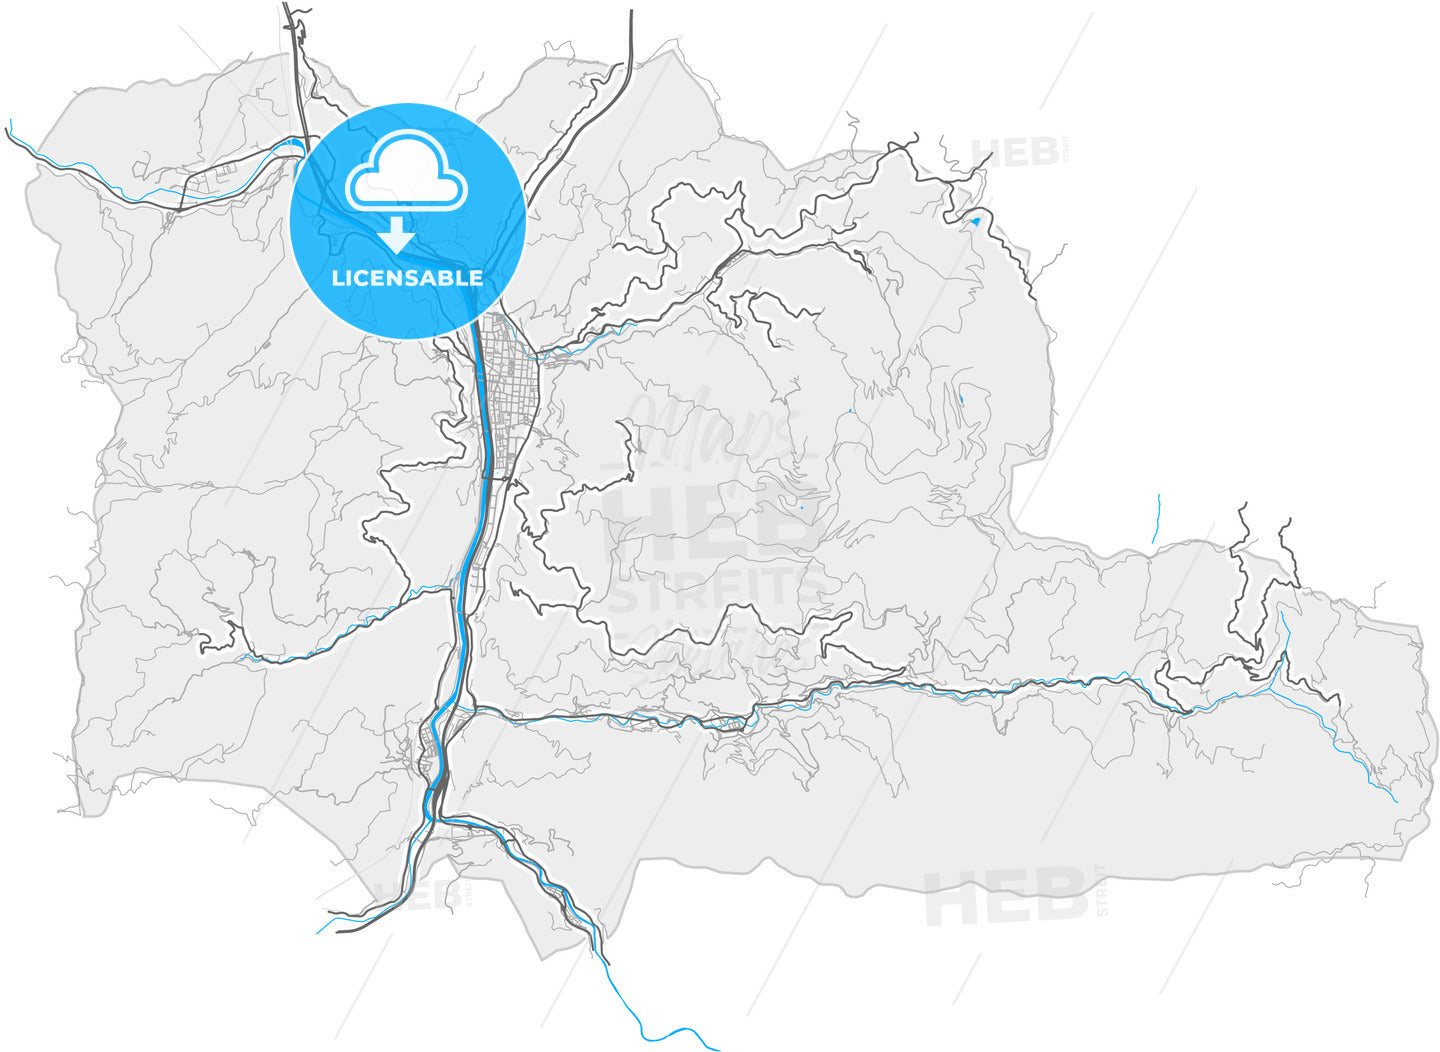 Mieres, Asturias, Spain, high quality vector map